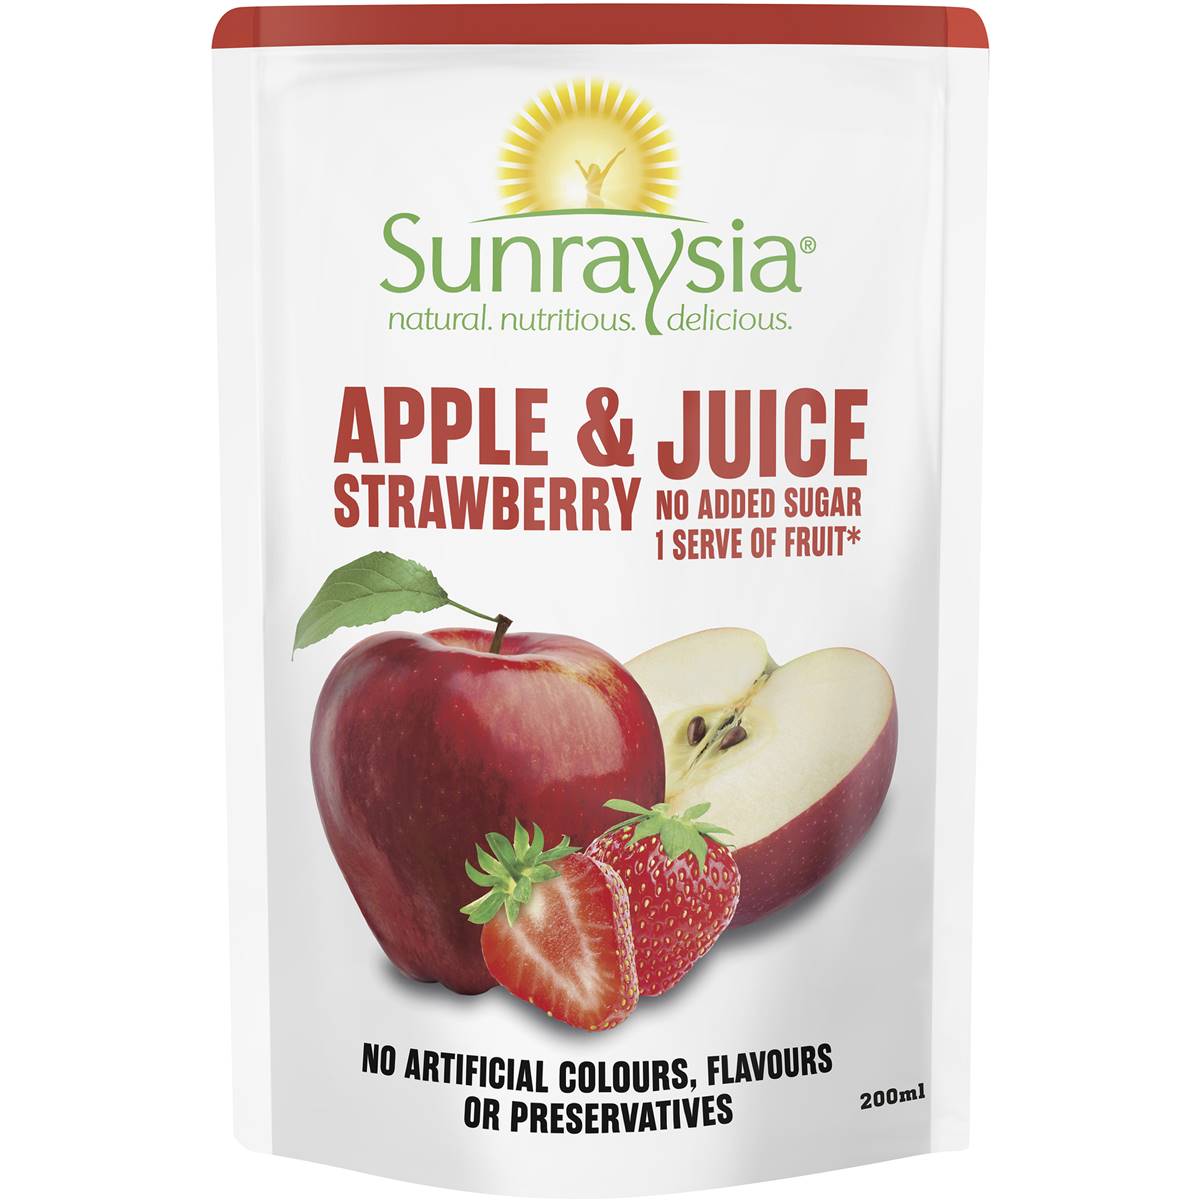 Calories in Sunraysia Apple & Strawberry Juice